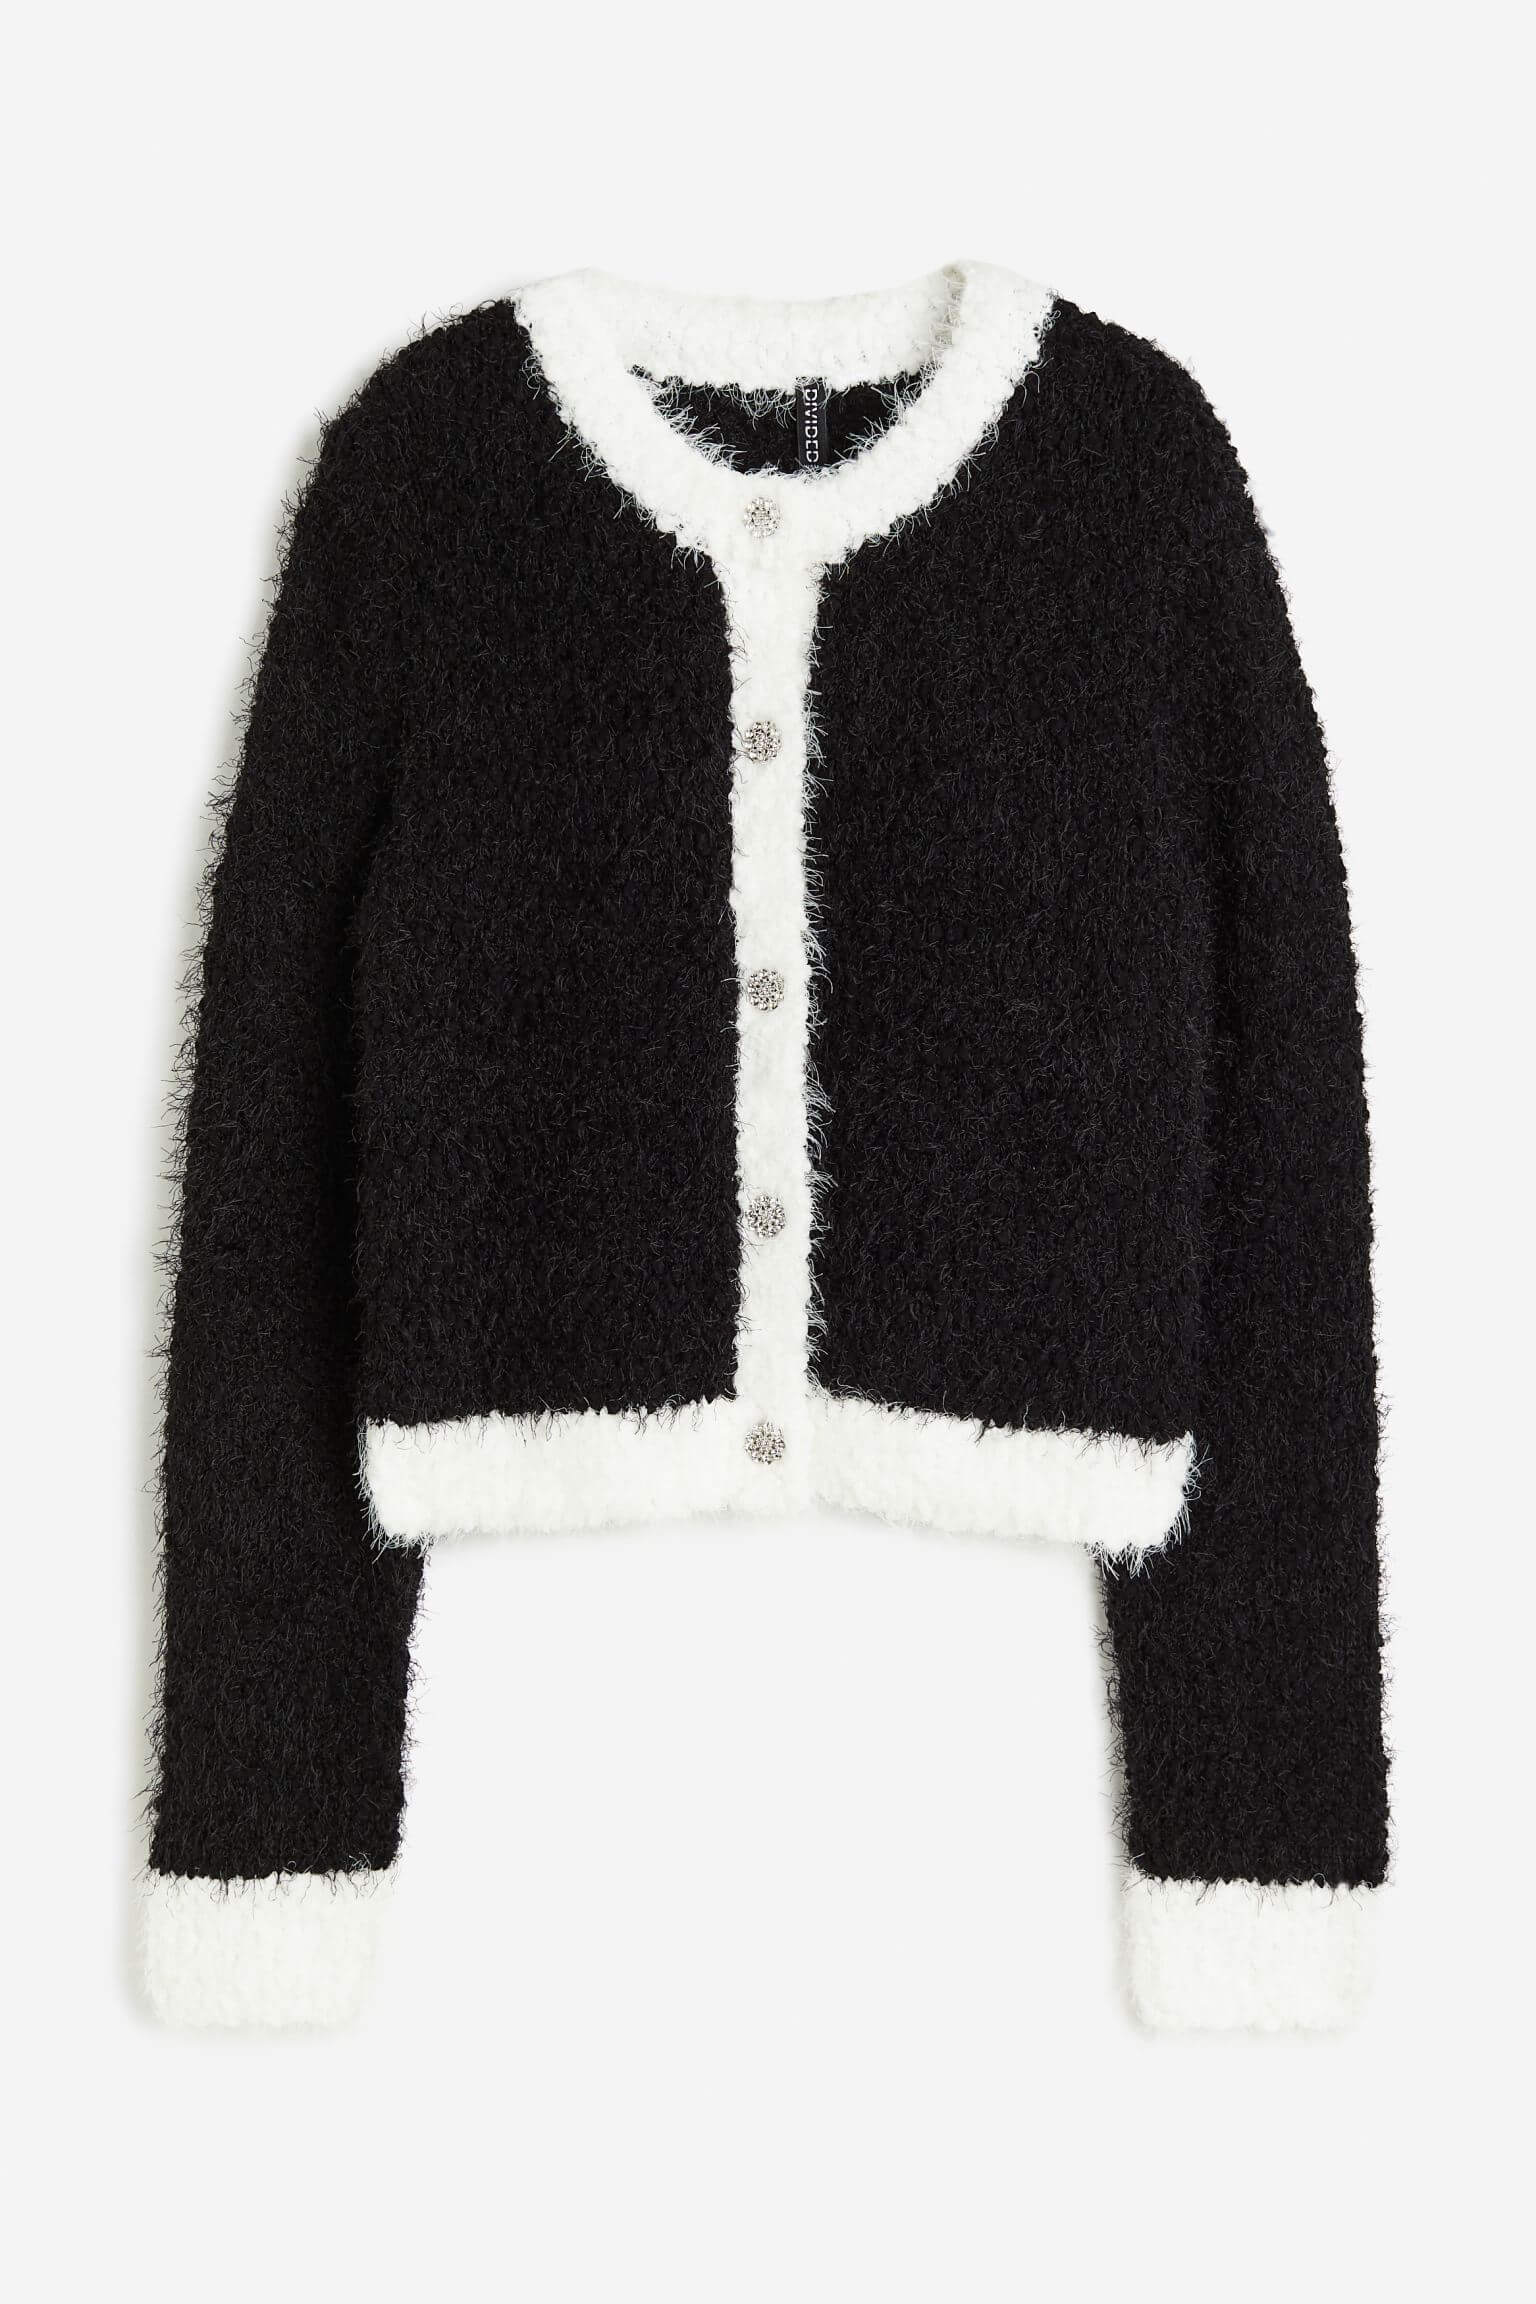 Кардиган H&M Rhinestone-button Fluffy-knit, черный/белый кардиган укороченный из трикотажа пуантель s белый